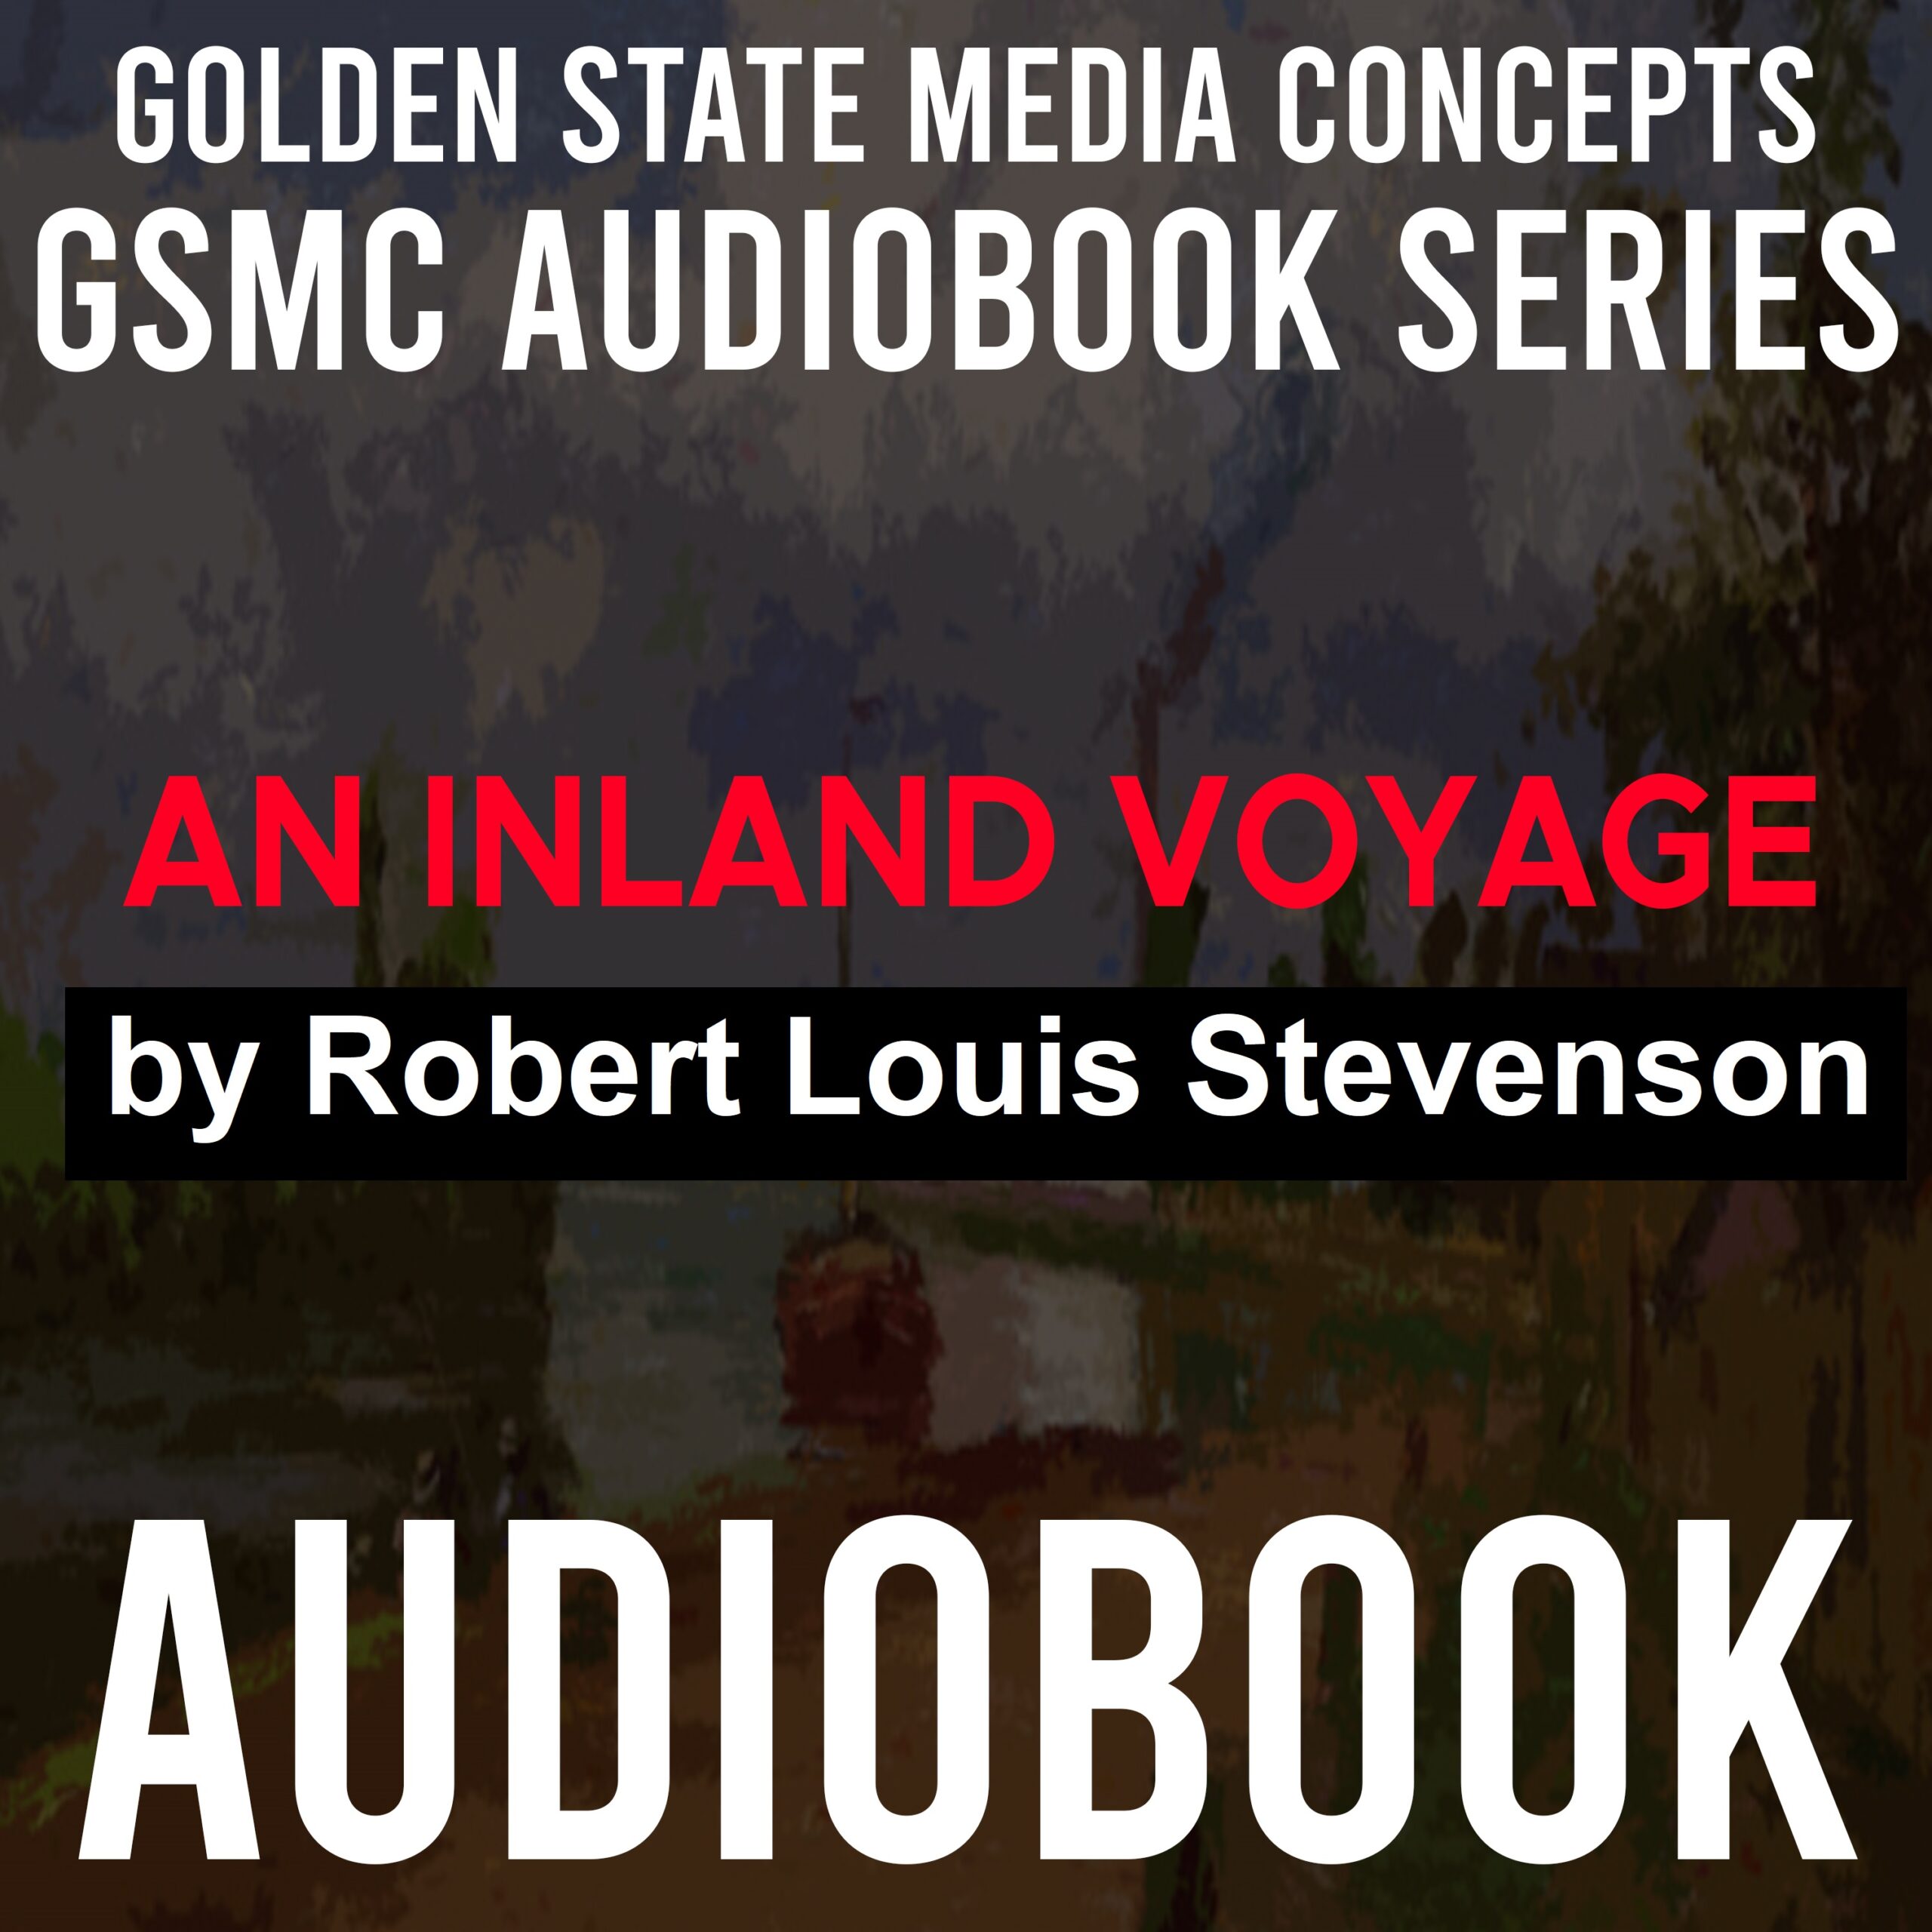 GSMC Audiobook Series: An Inland Voyage by Robert Louis Stevenson